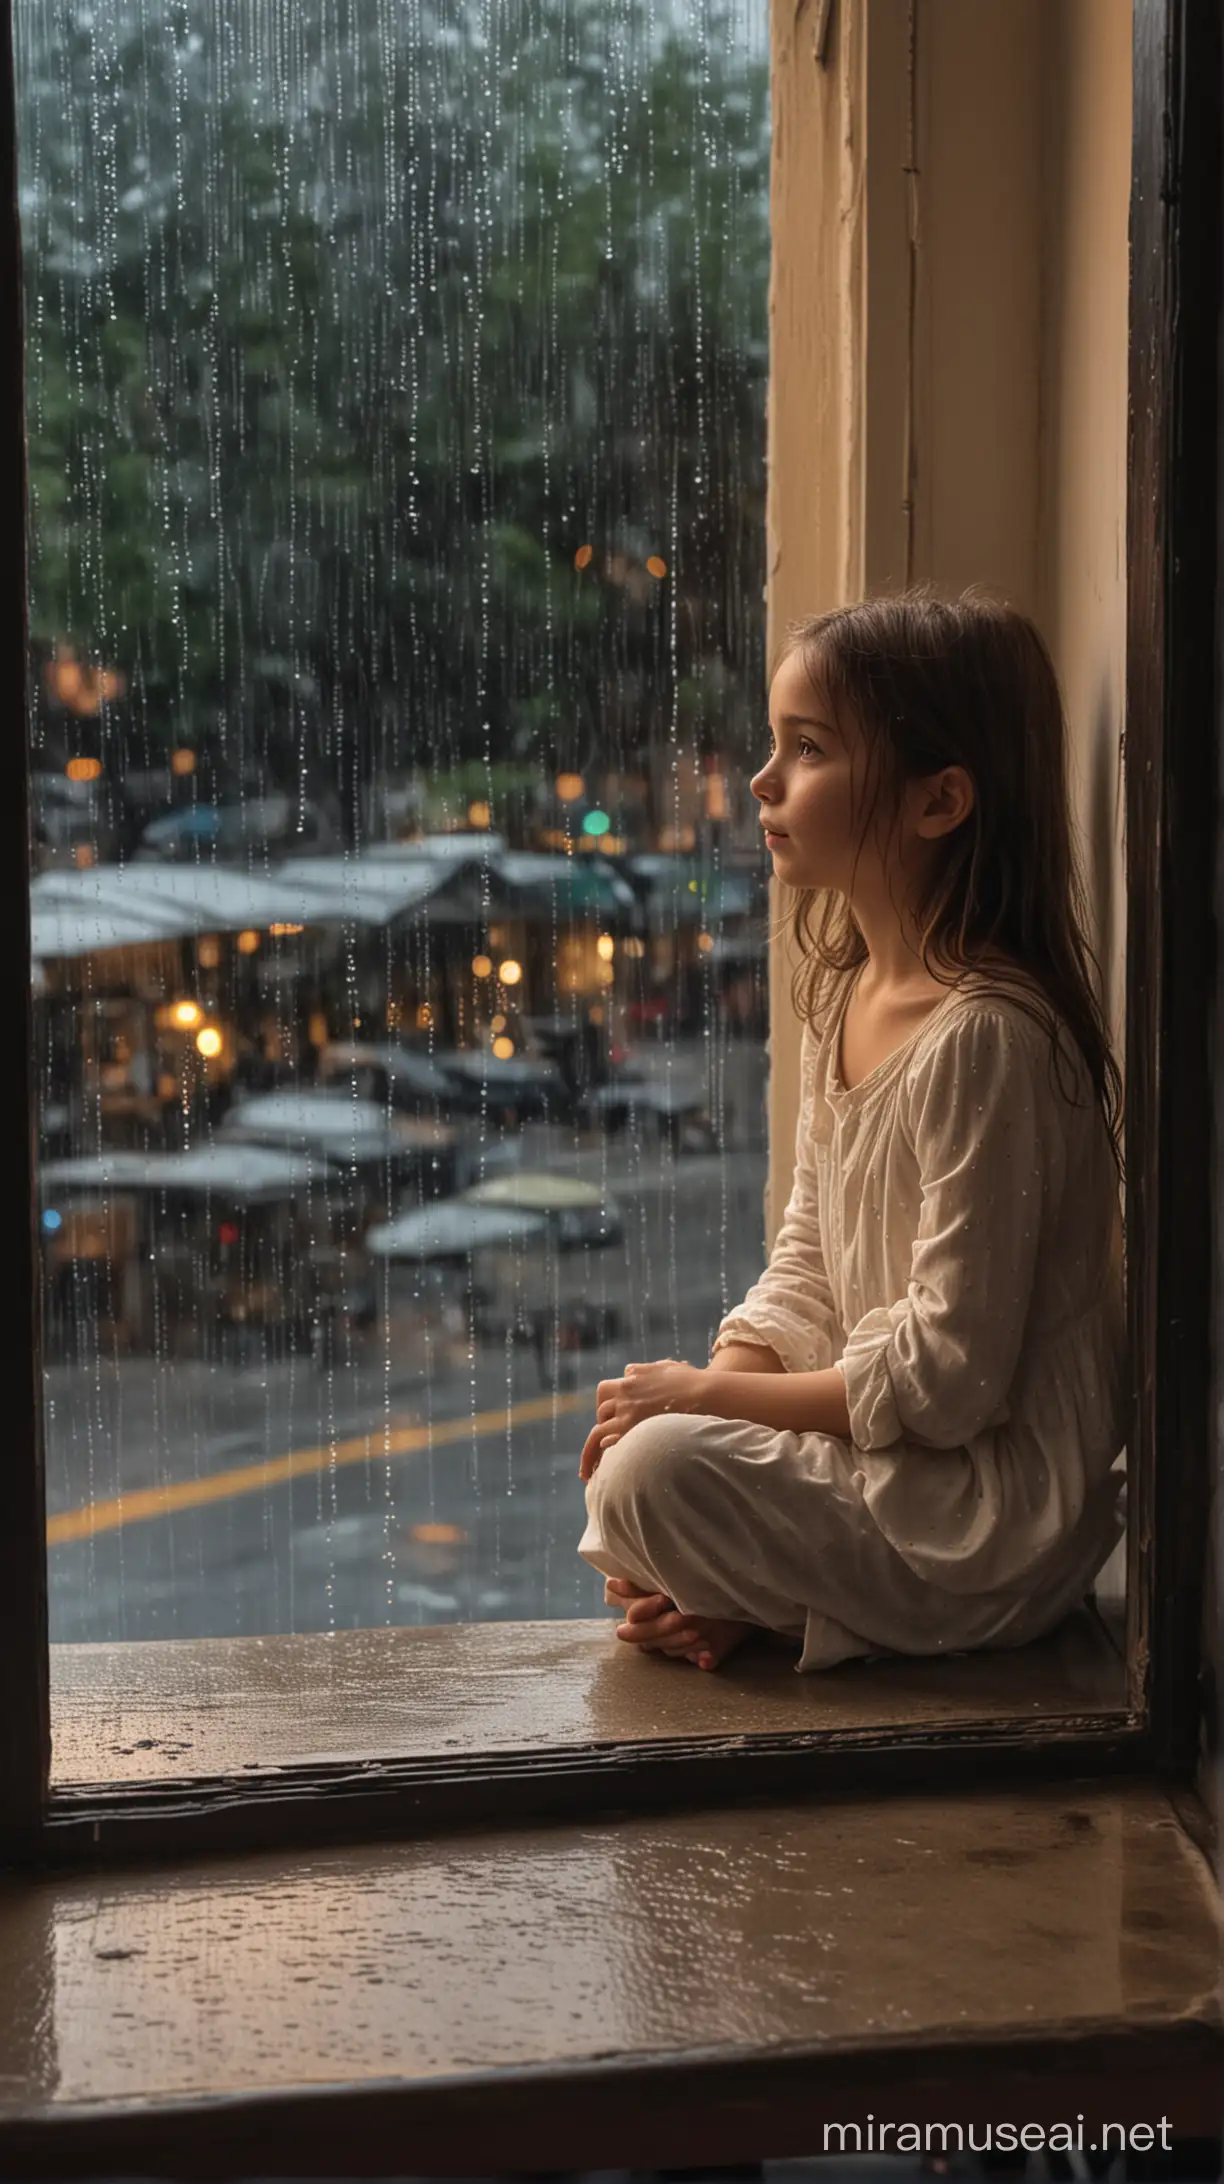 Contemplative Girl Watching Rain Through Caf Window